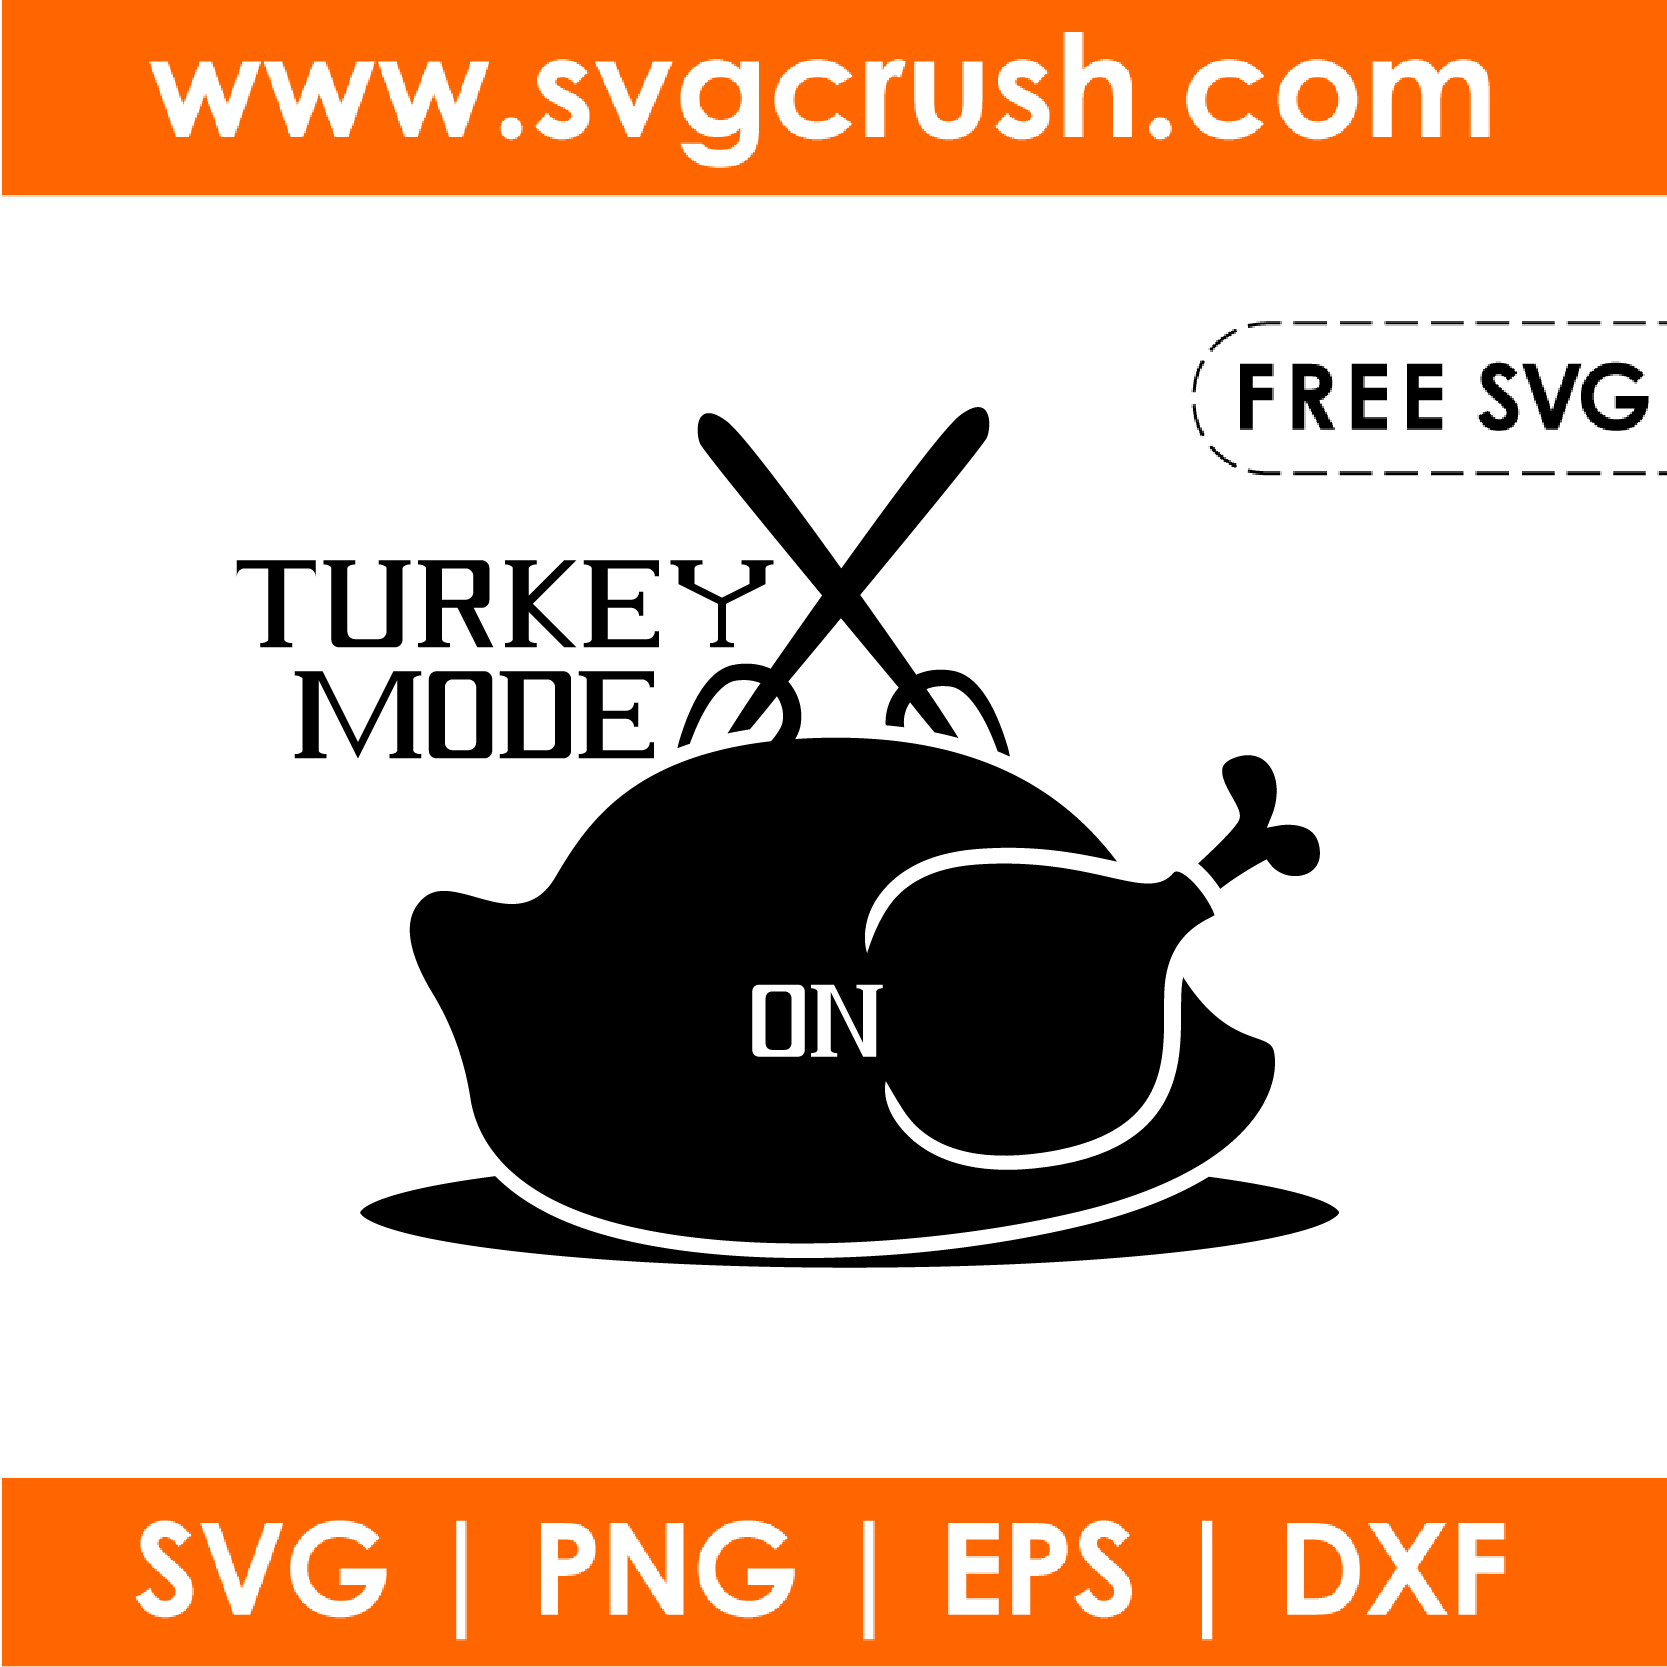 free turkey-mode-on-001 svg